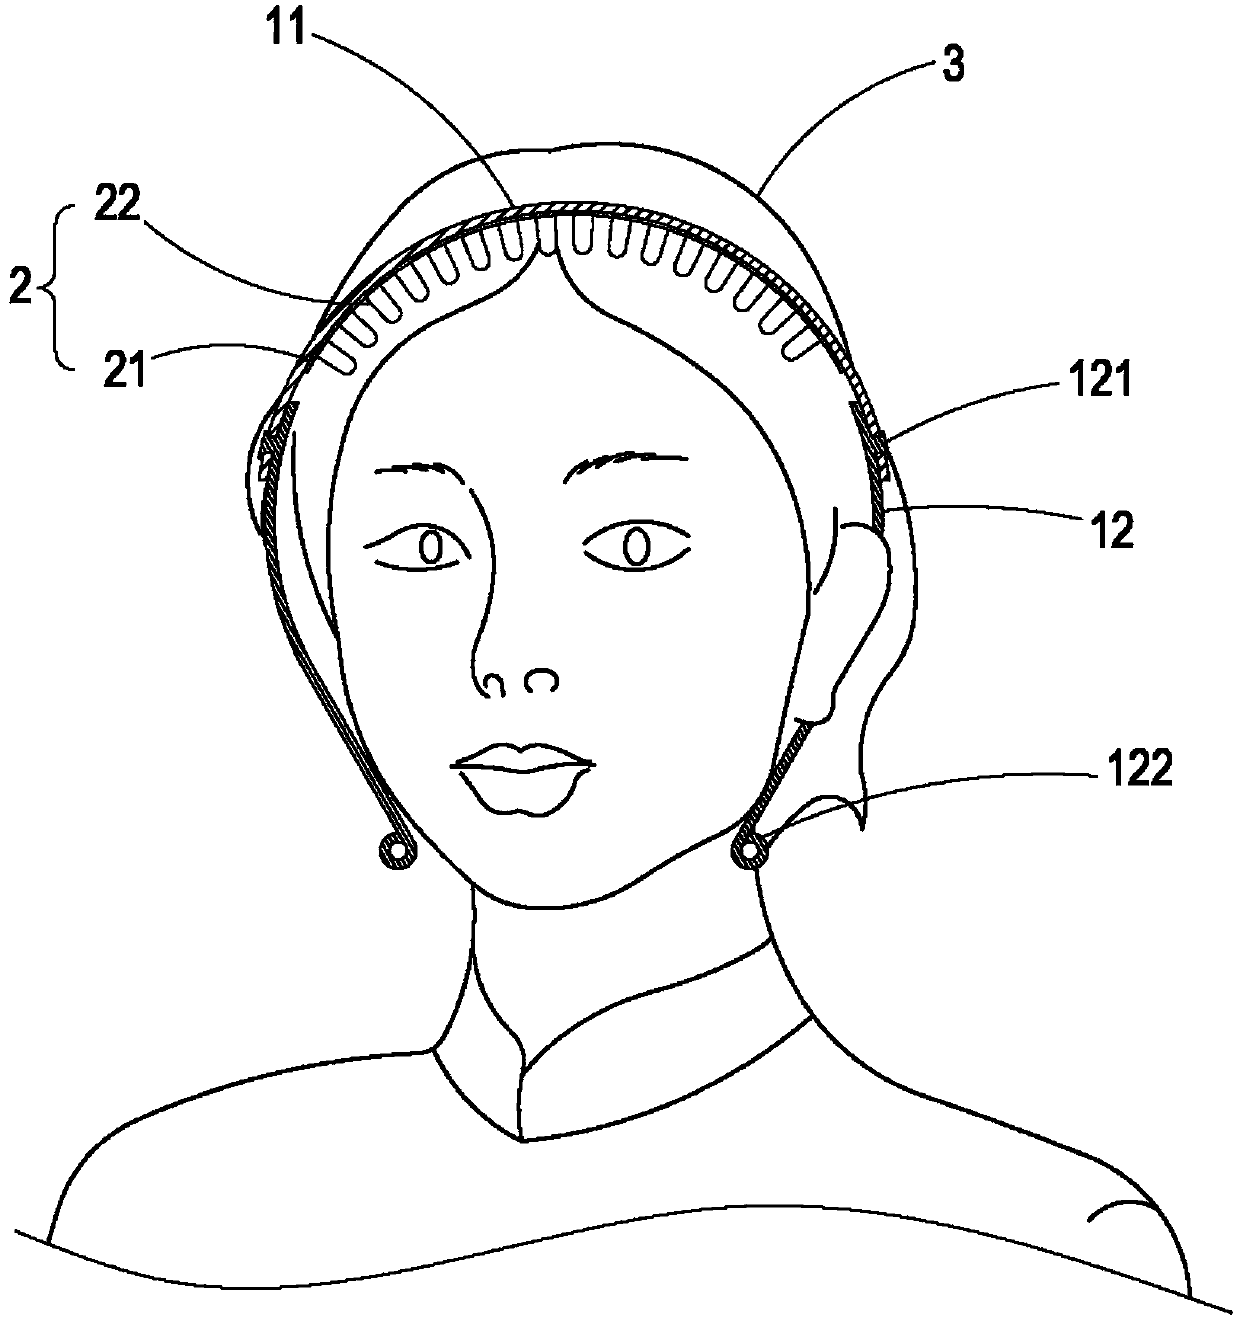 Head massage device